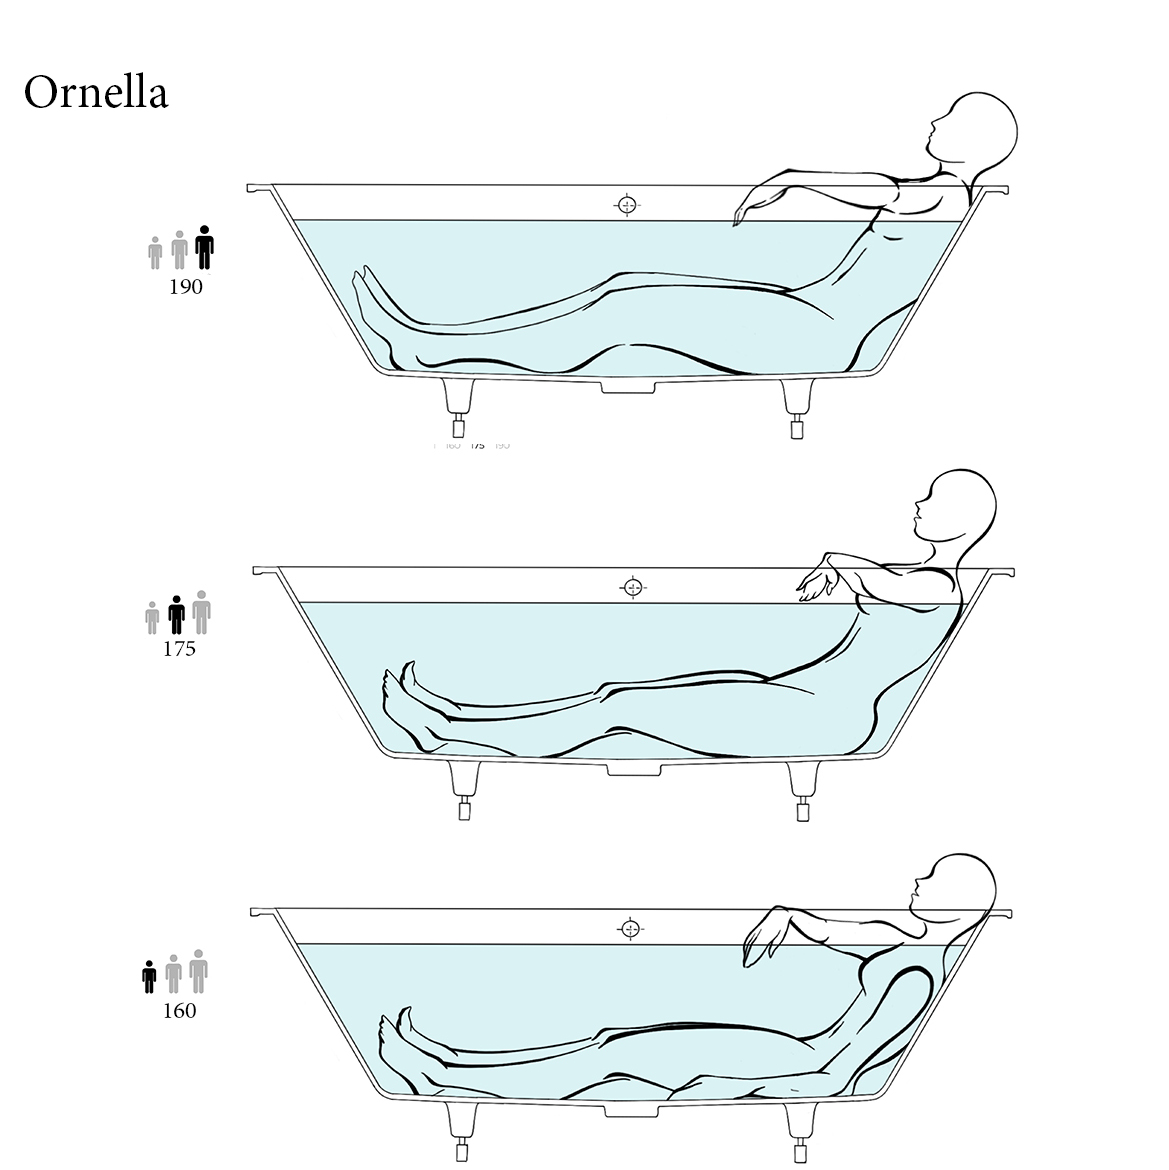 Salini Ornella Axis 190 Встраиваемая ванна 190х90х60см, прямоугольная, материал: S-Stone, цвет: белый матовый